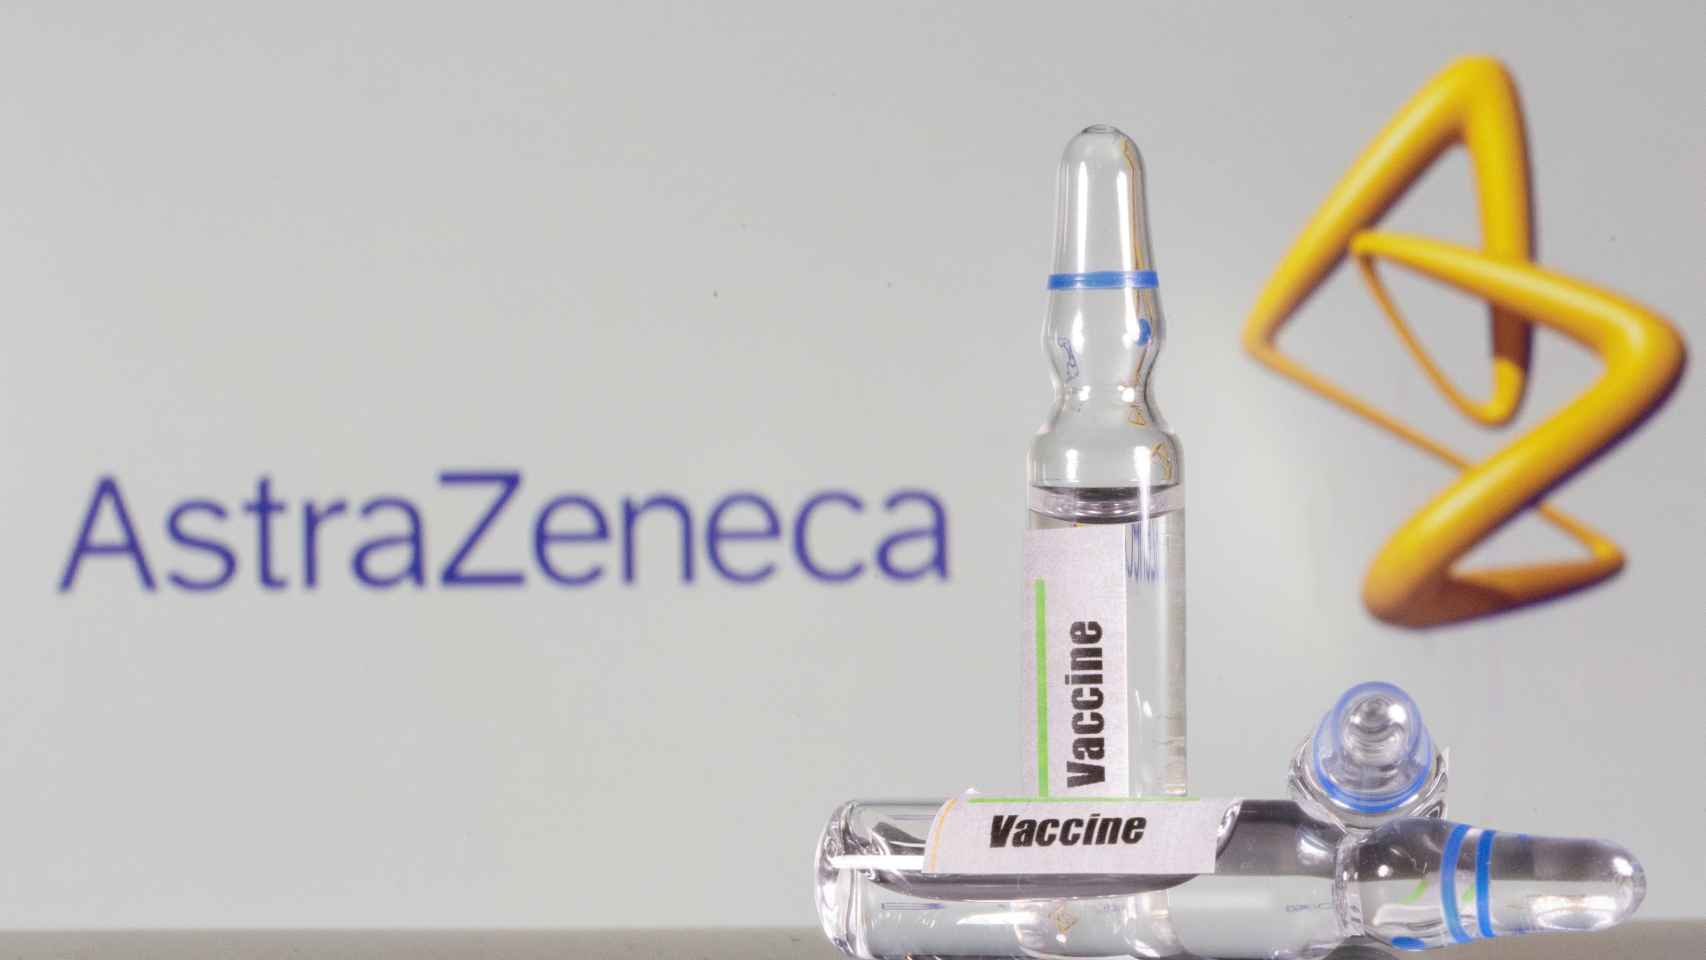 La vacuna de AstraZeneca